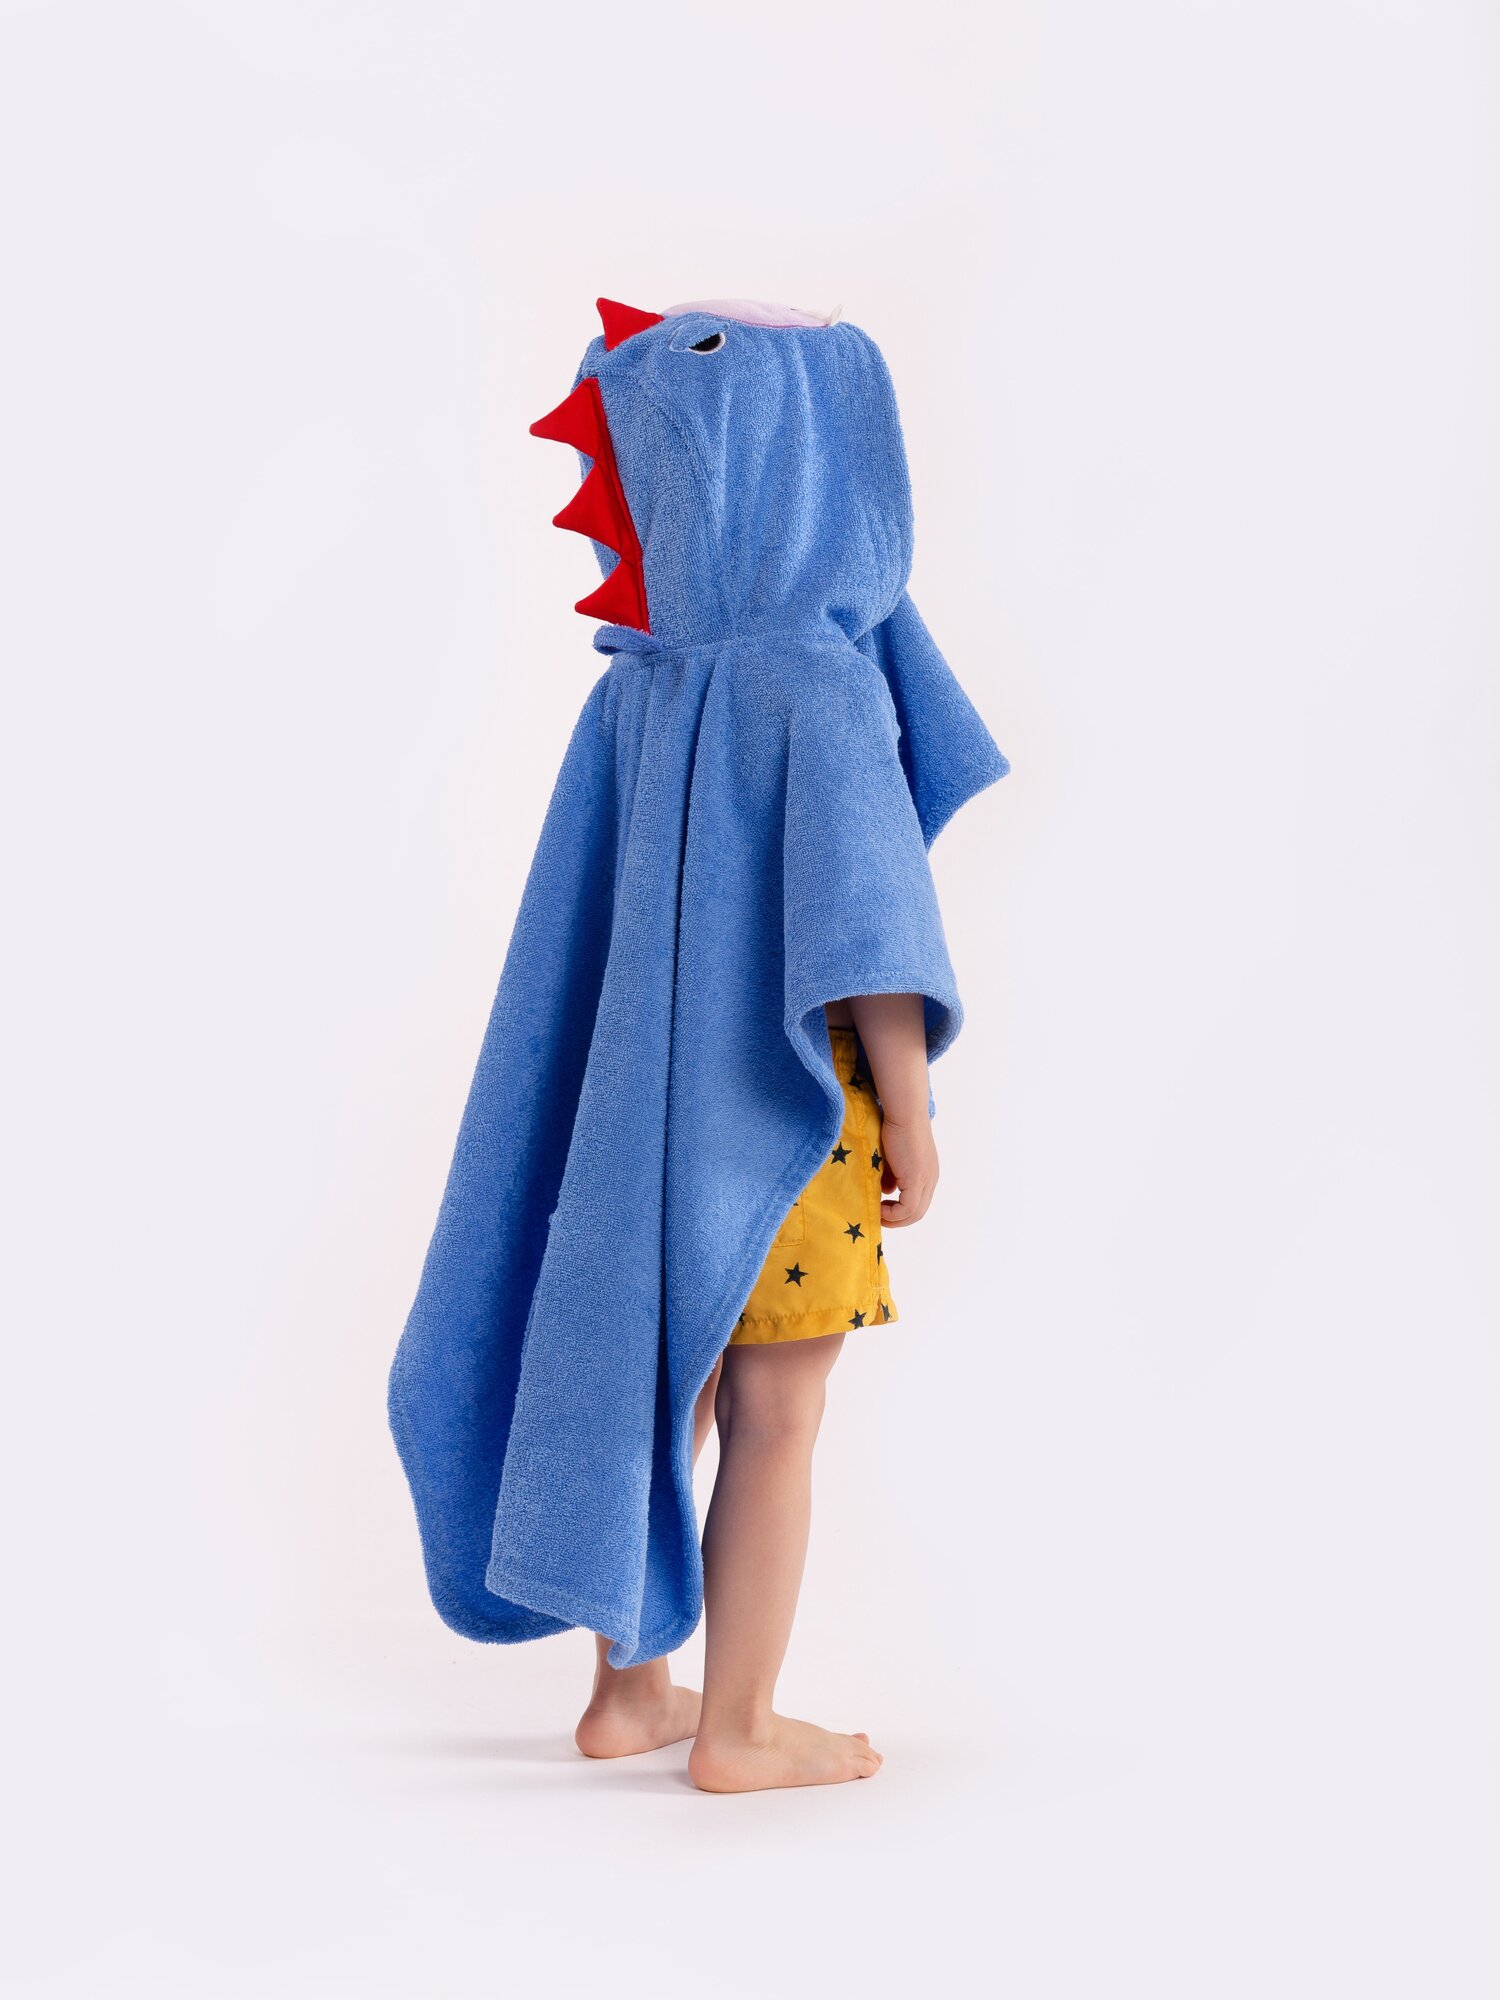 Полотенце-пончо Fluffy Bunny Дракон, цвет Синий, Размер 132Х67см, 100% хлопок, 380гр/м2 - фотография № 4